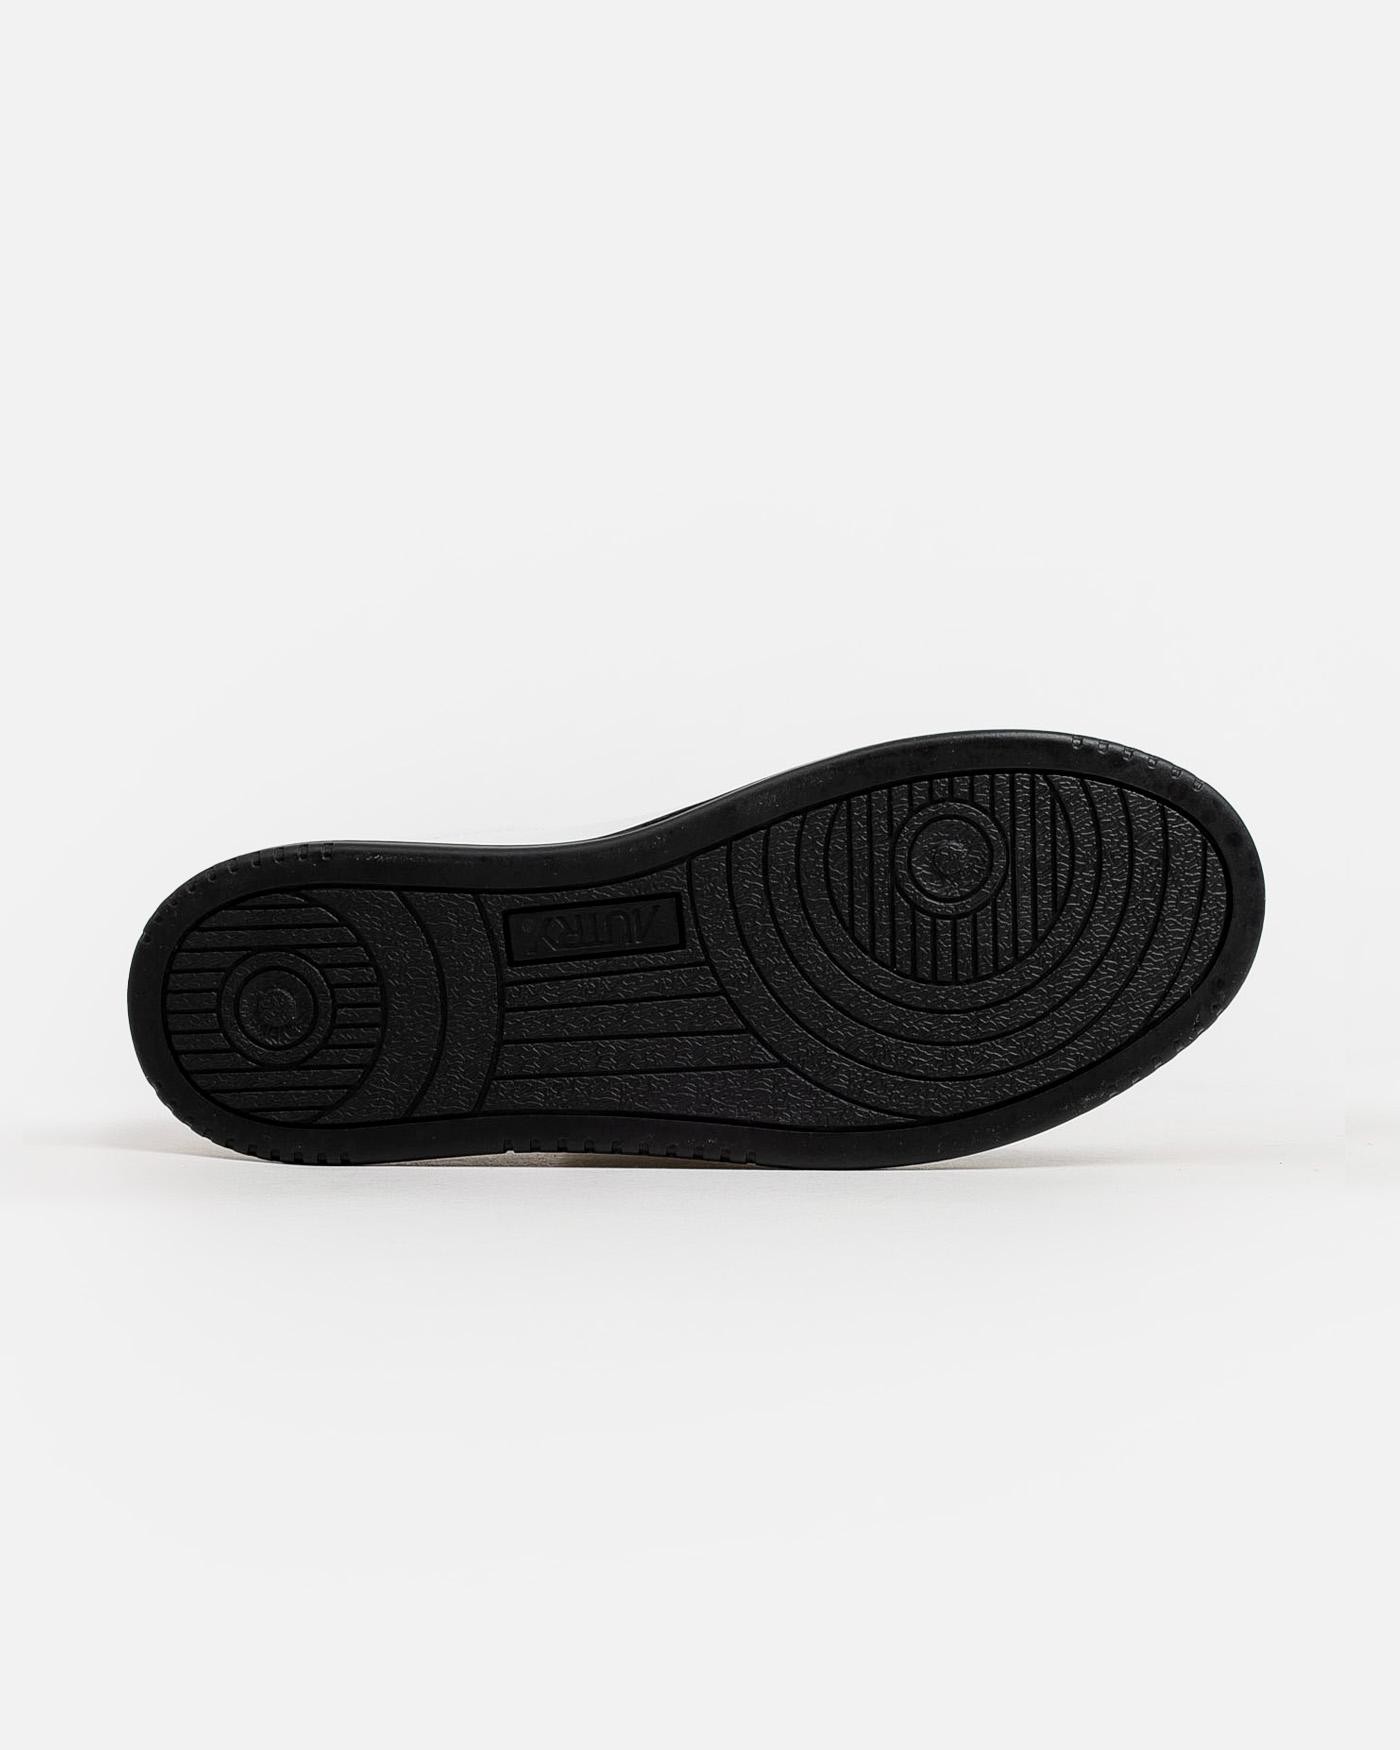 autry-zapatillas-aulm-wb01-sneakers-black-white-negras-3